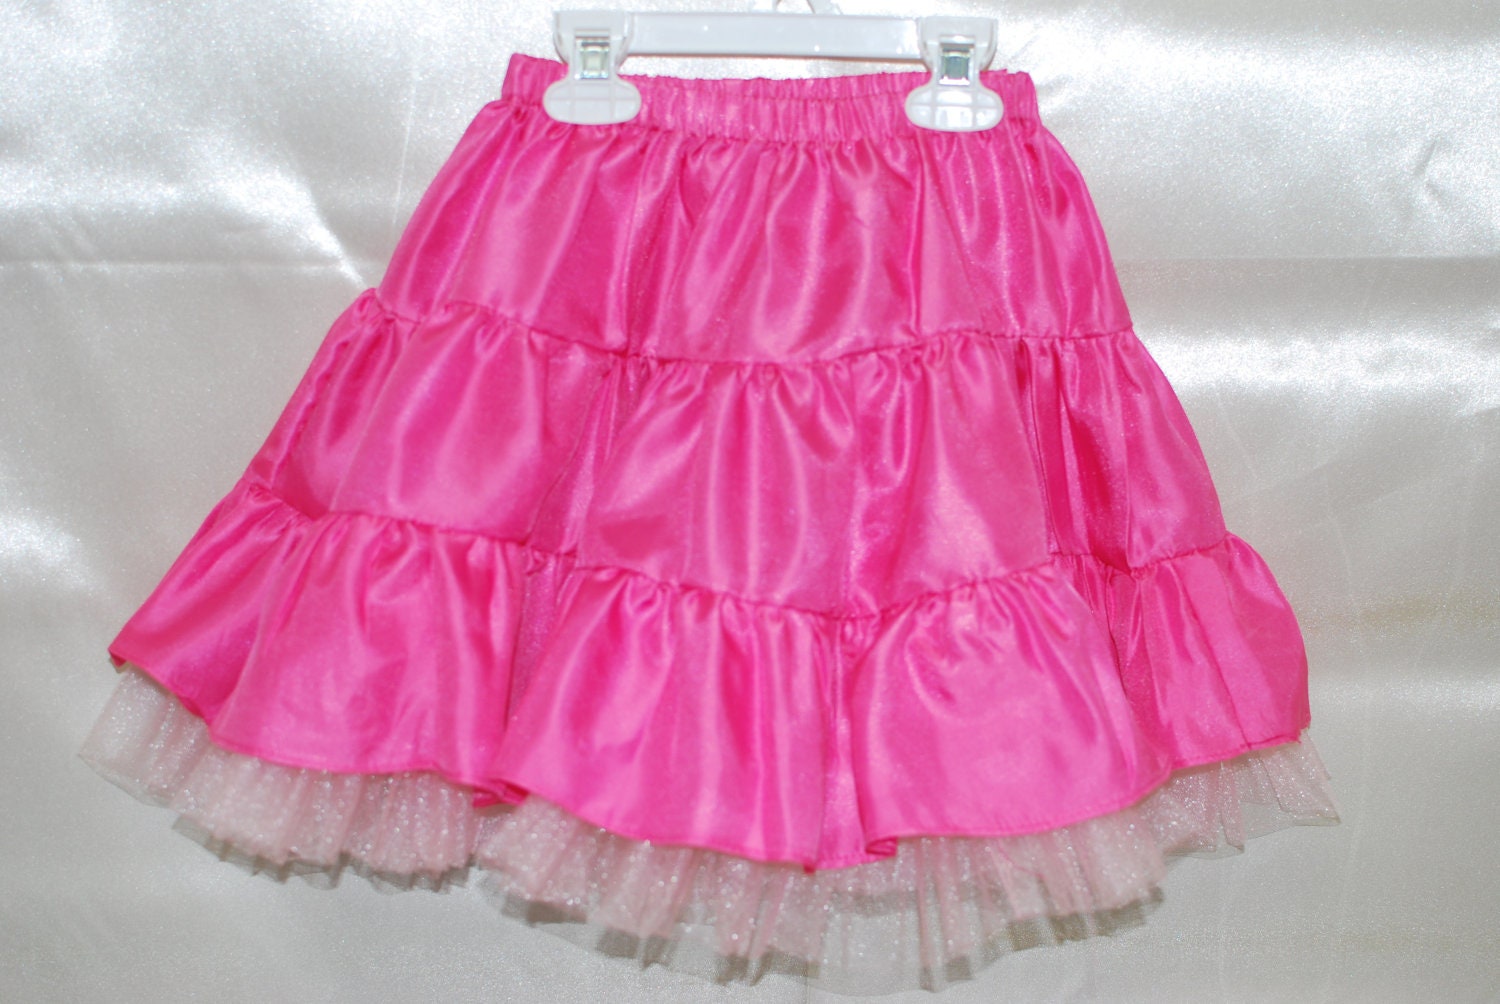 ROCKSTAR Flouncy Skirt in Hot Pink Satin by SilverStarJackets